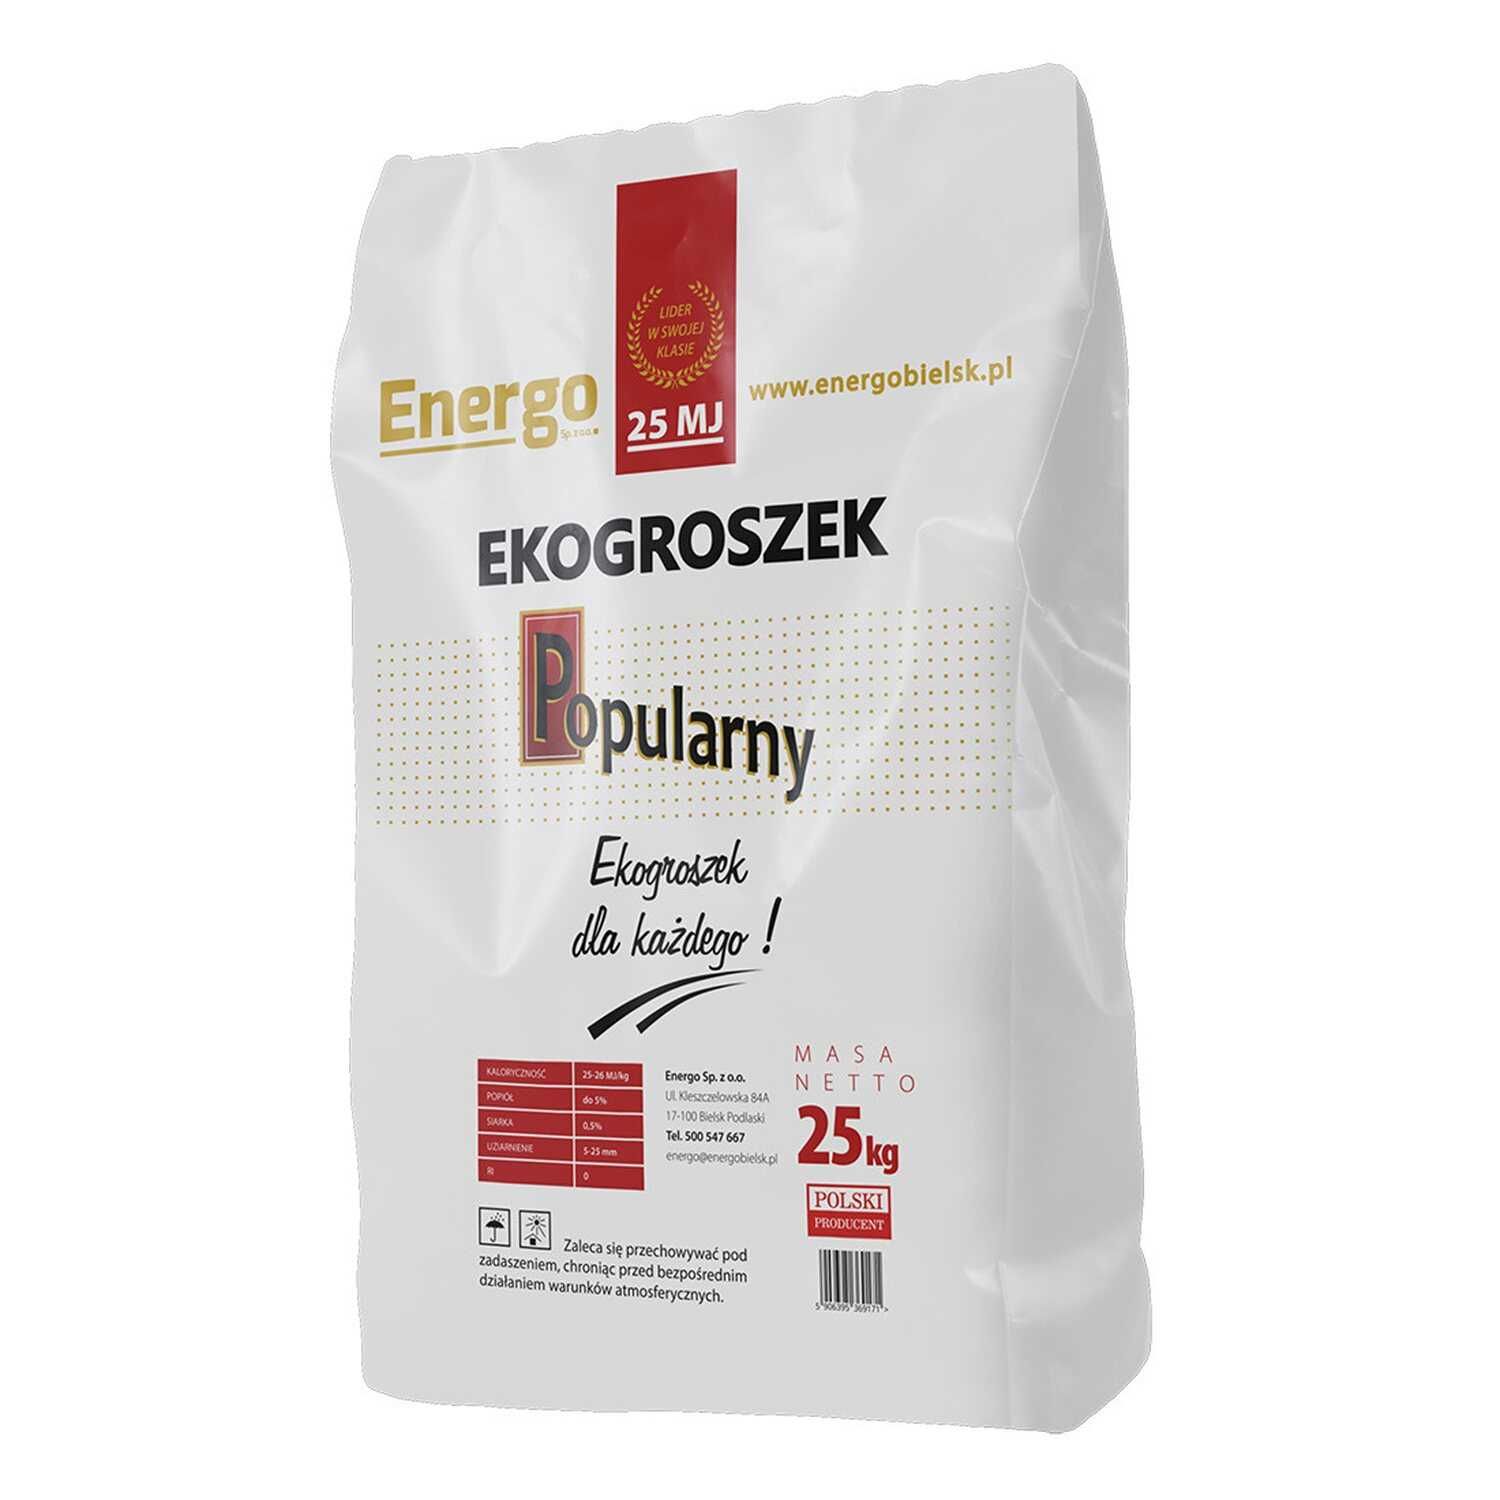 Ekogroszek Extr Premium+28Mj,Eko SKARBEK BOBREK,Pellet,Transport winda